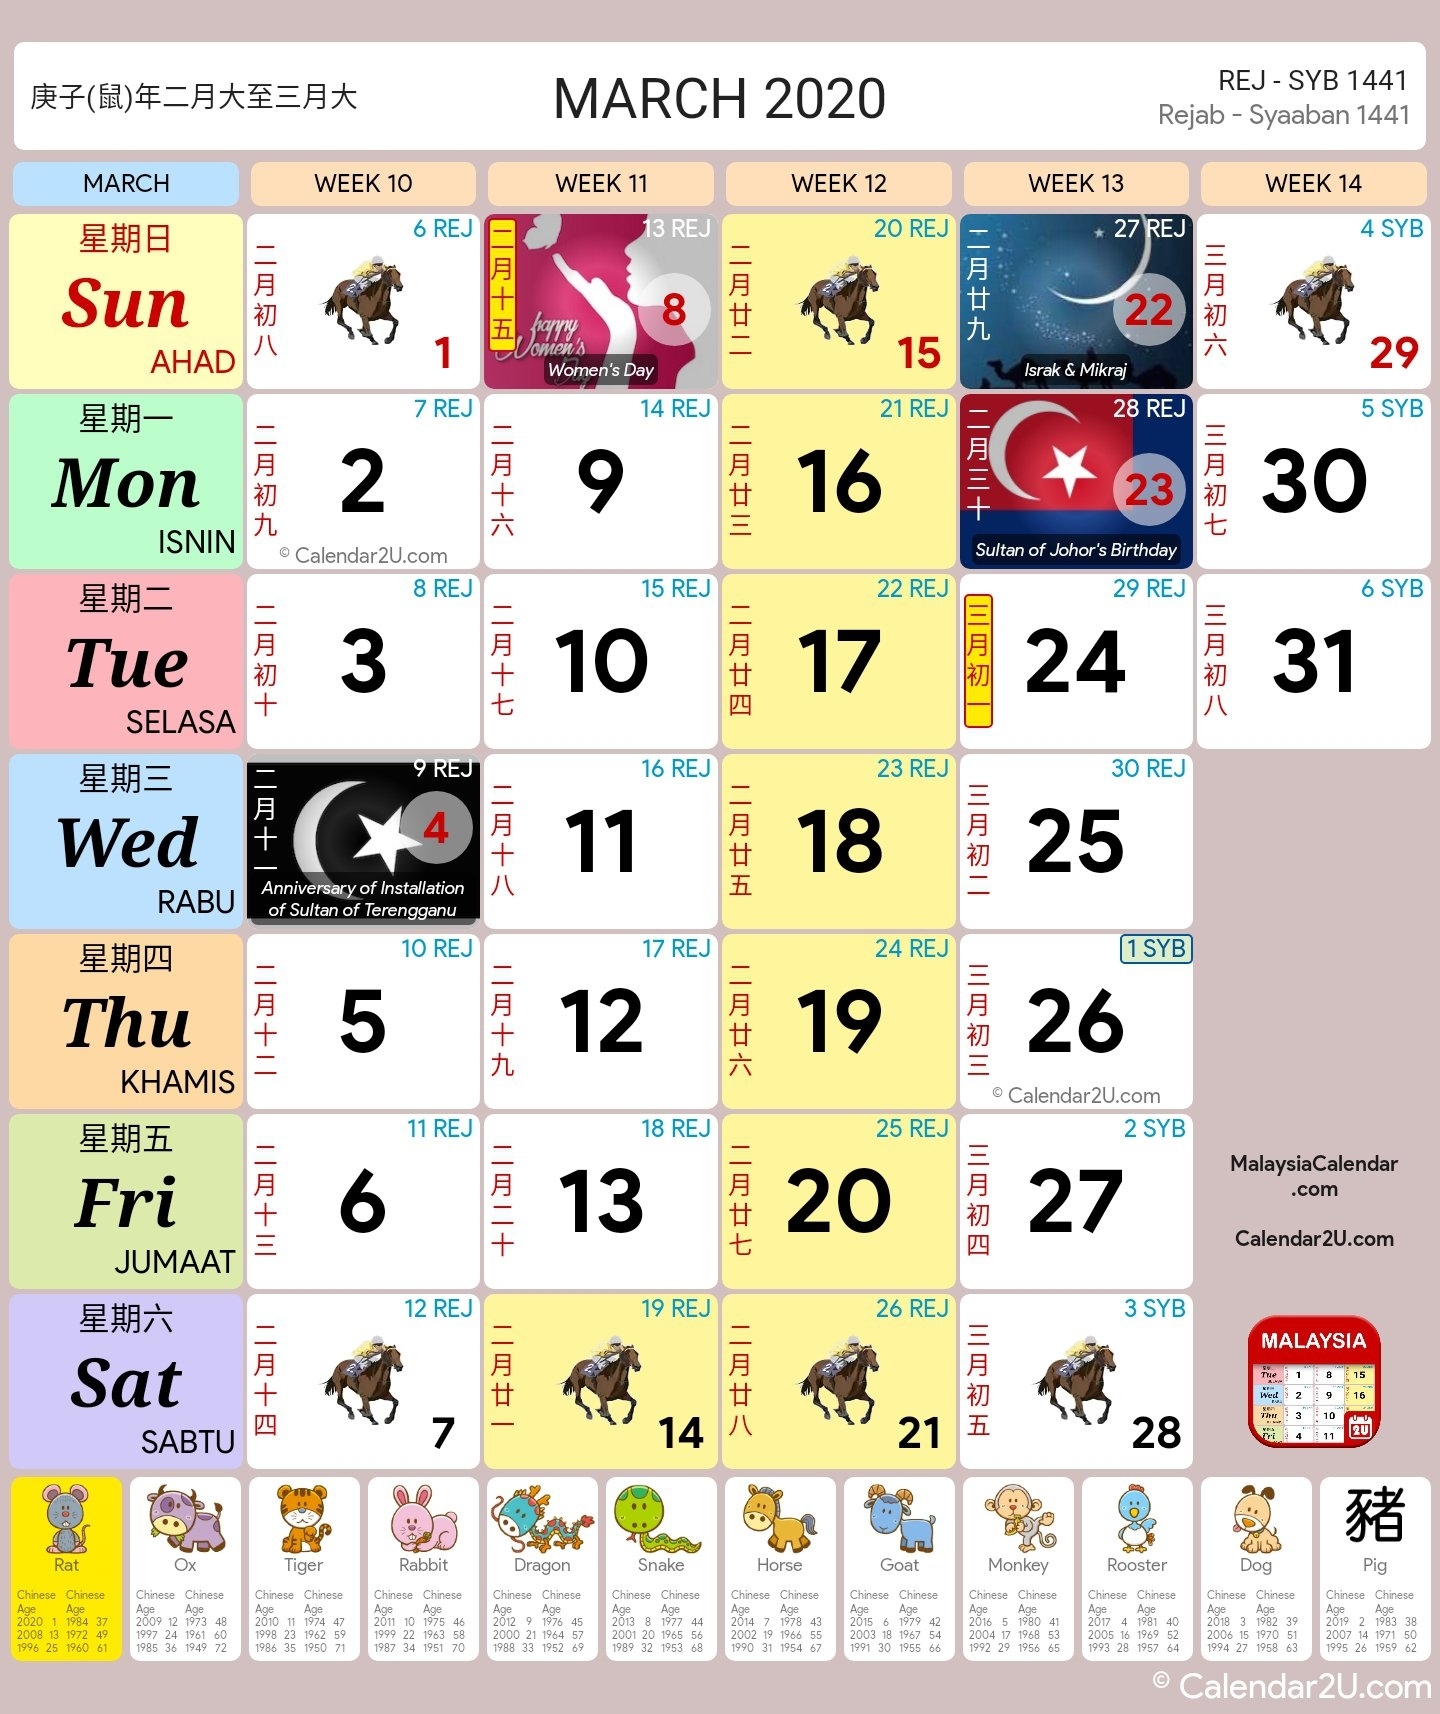 Malaysia Calendar Year 2020 (School Holiday) - Malaysia Calendar Remarkable Calendar 2020 Malaysia With School Holiday